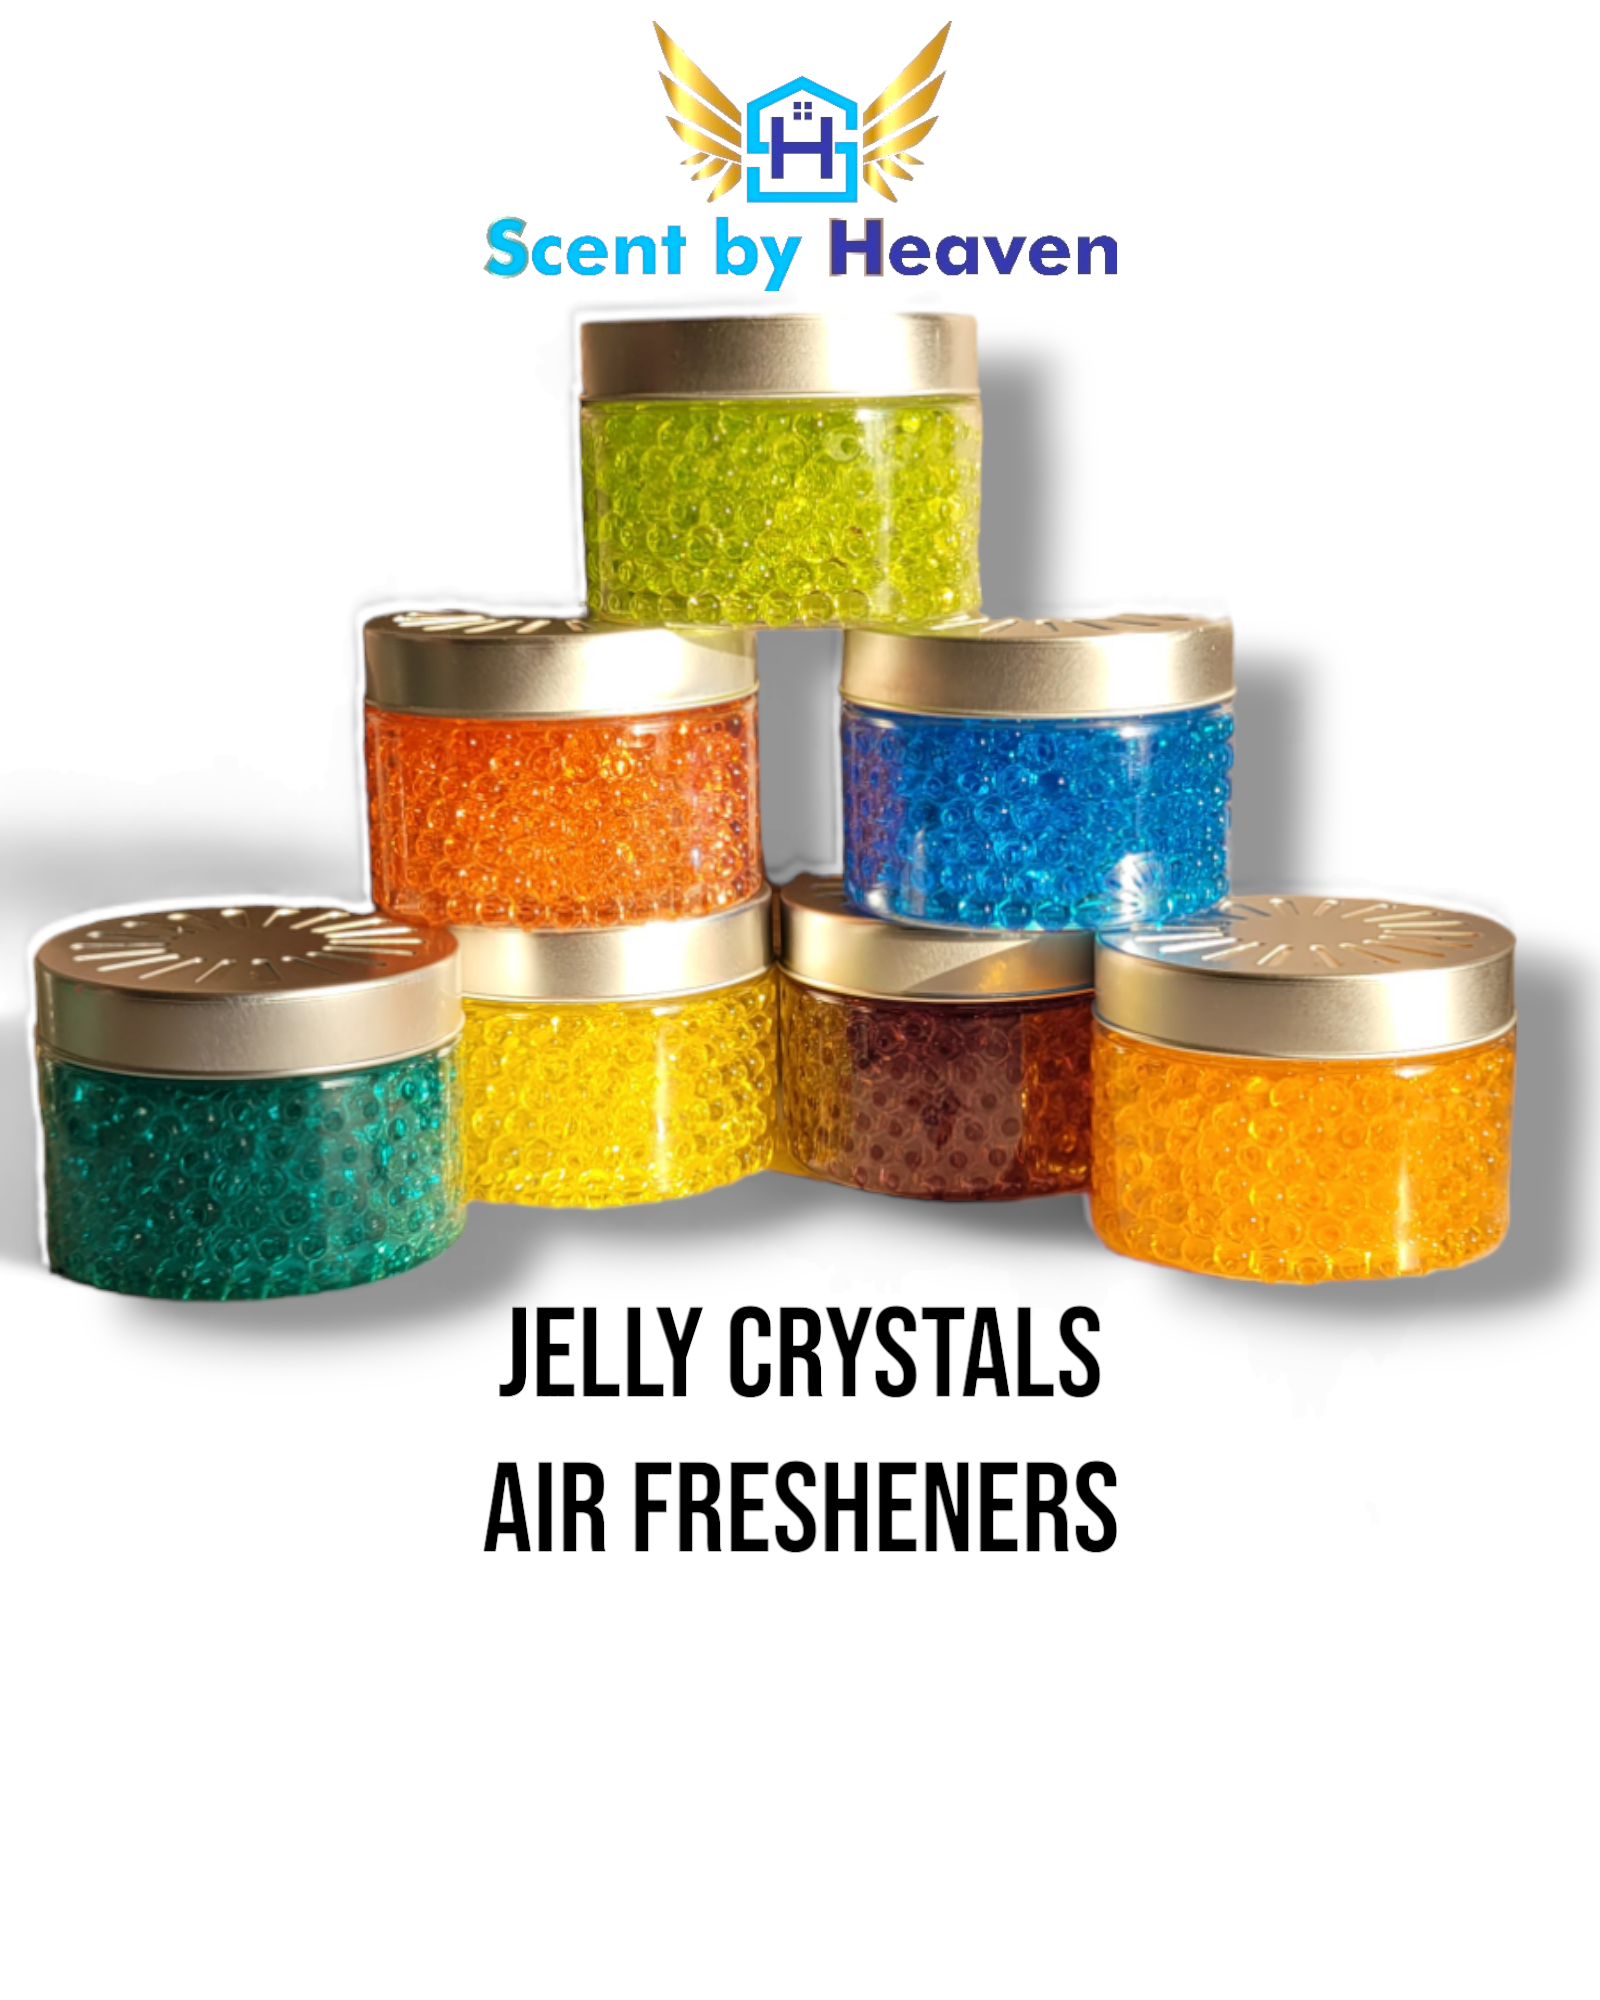 Crystal jelly air freshener